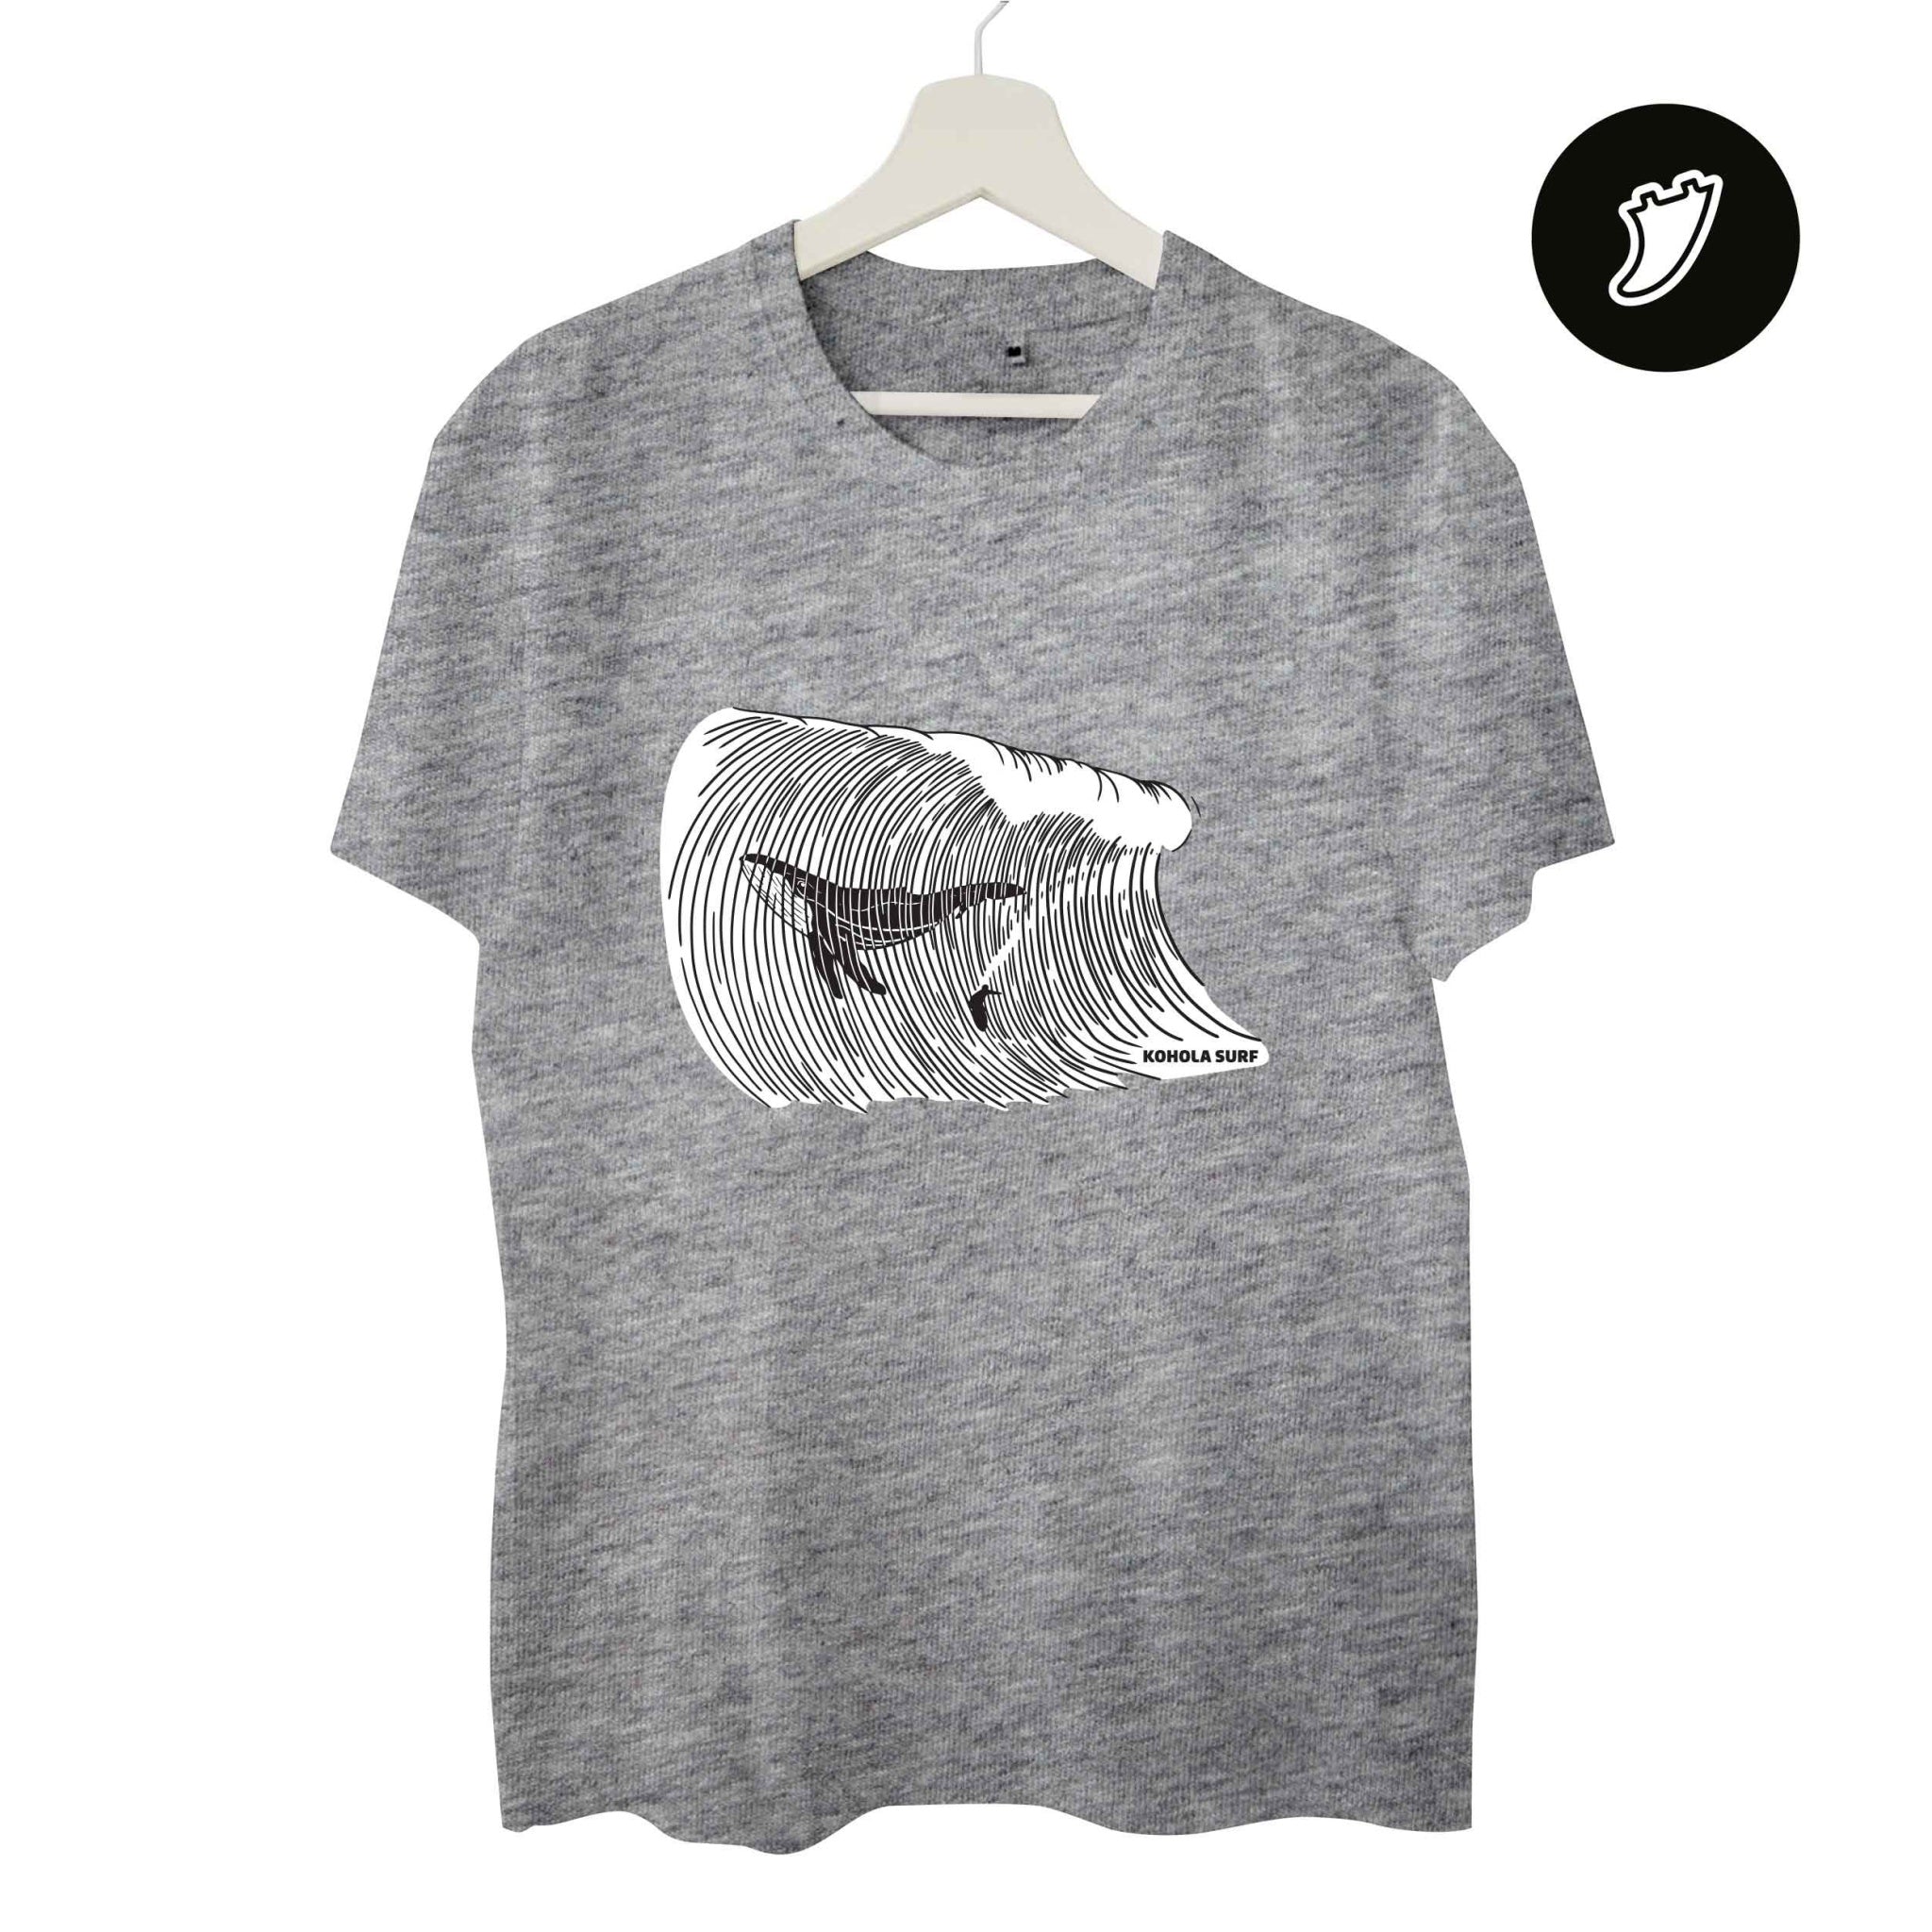 Big Whale Surfing Man T-Shirt